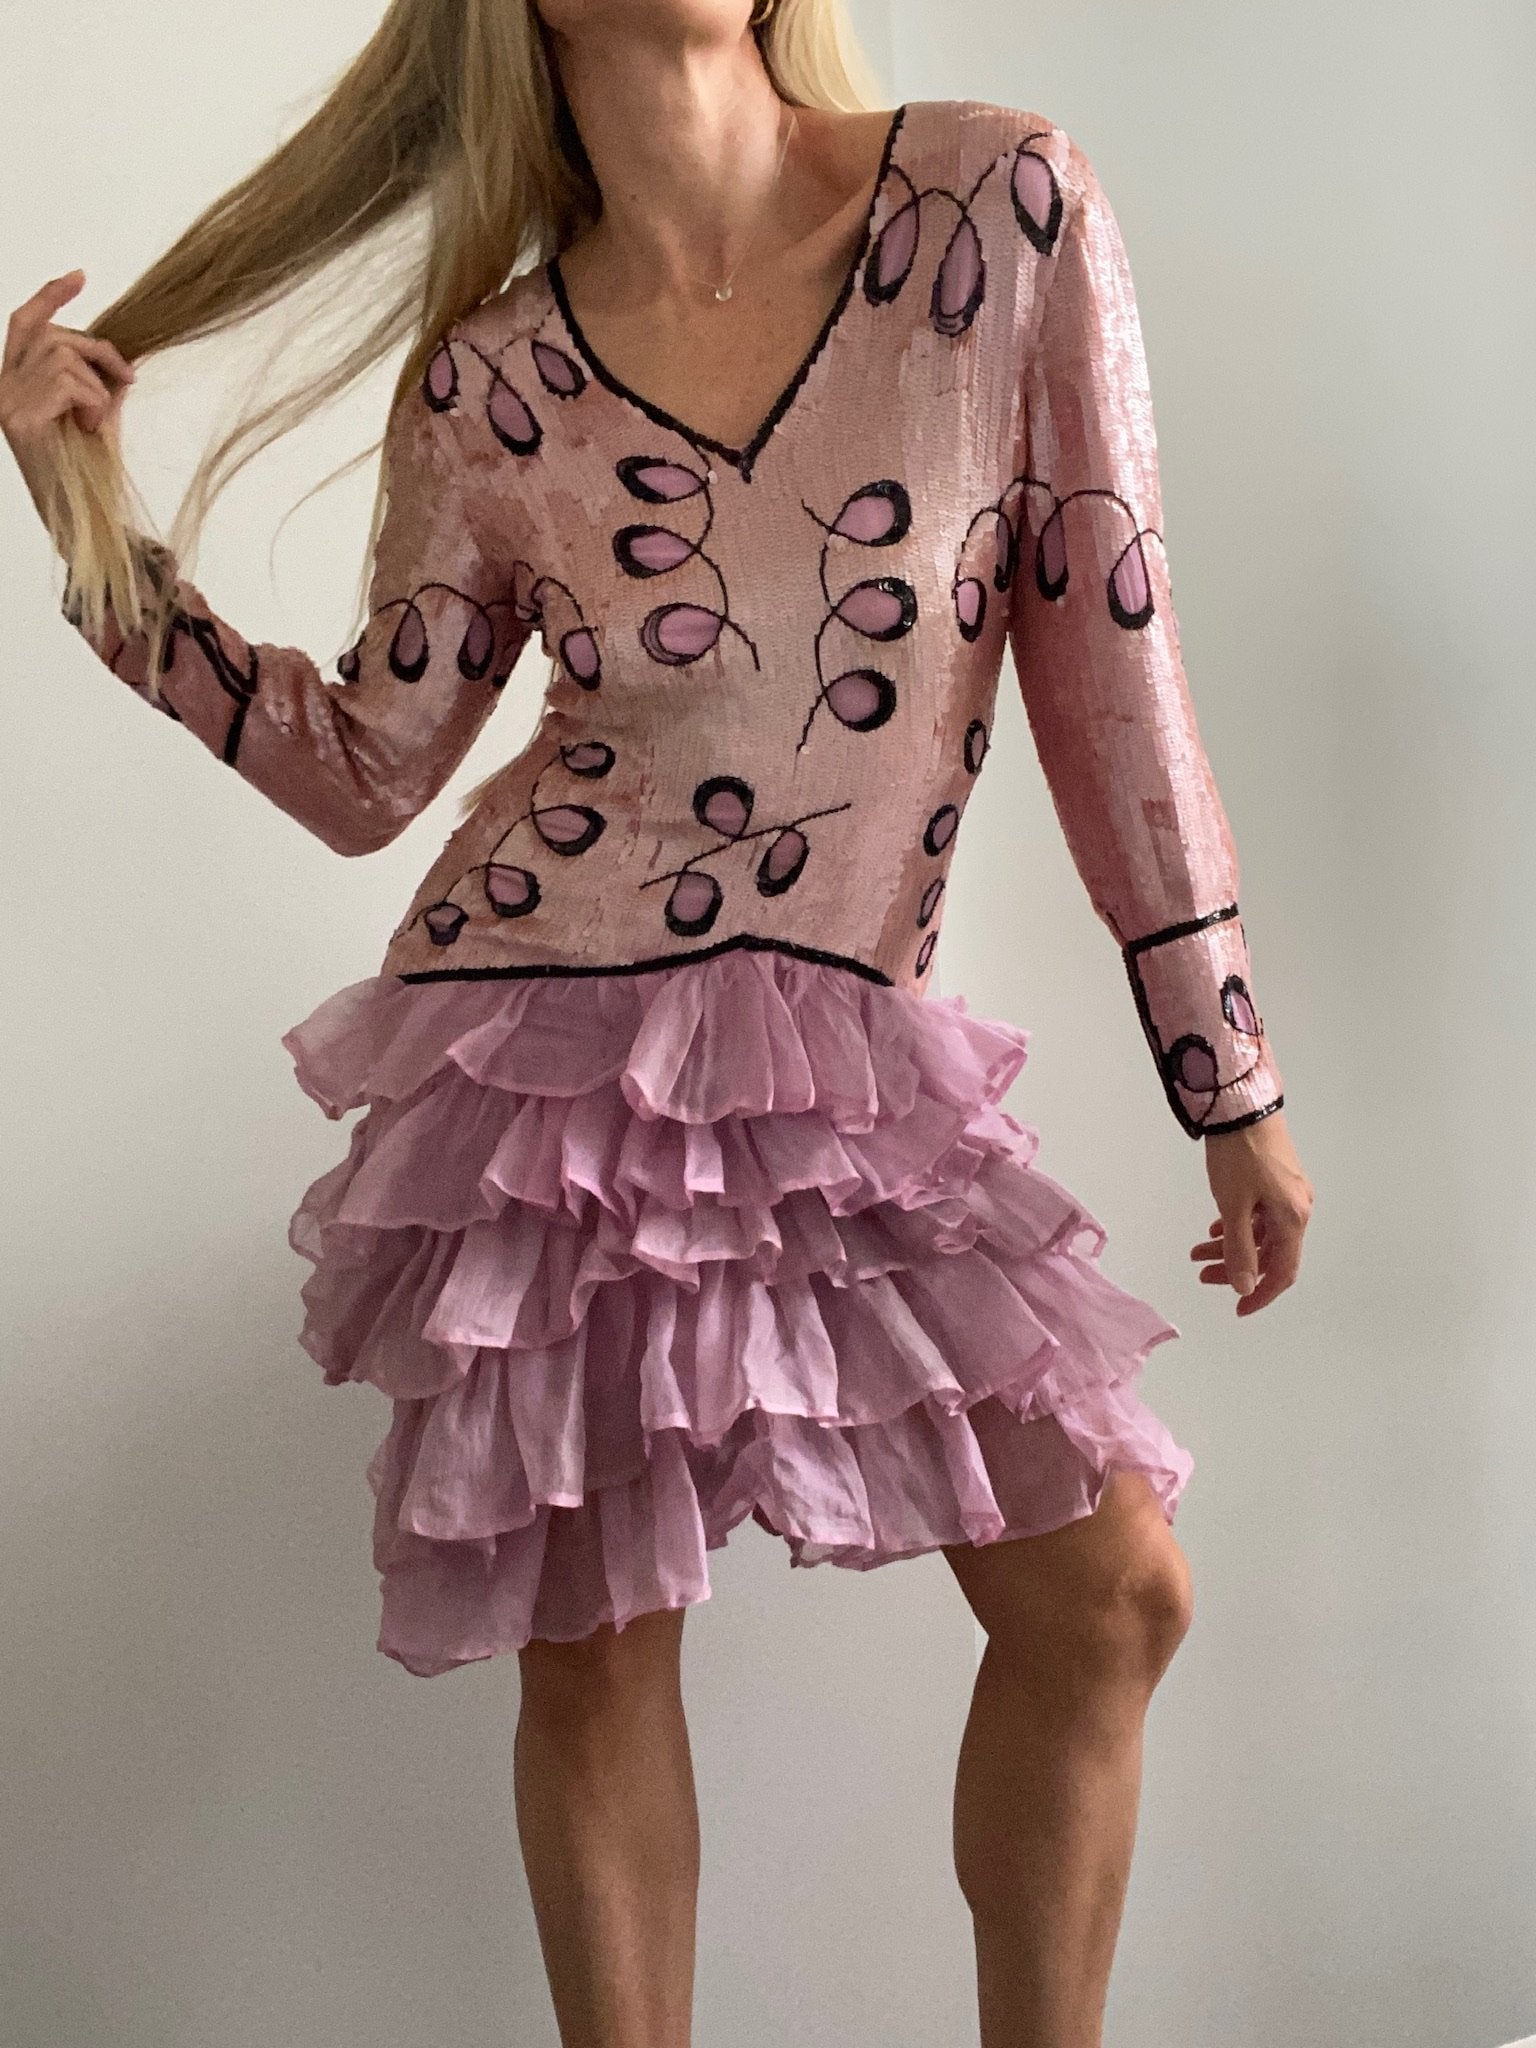 Jetsetbohemian Dresses Small Vintage Dolly Parton Dress